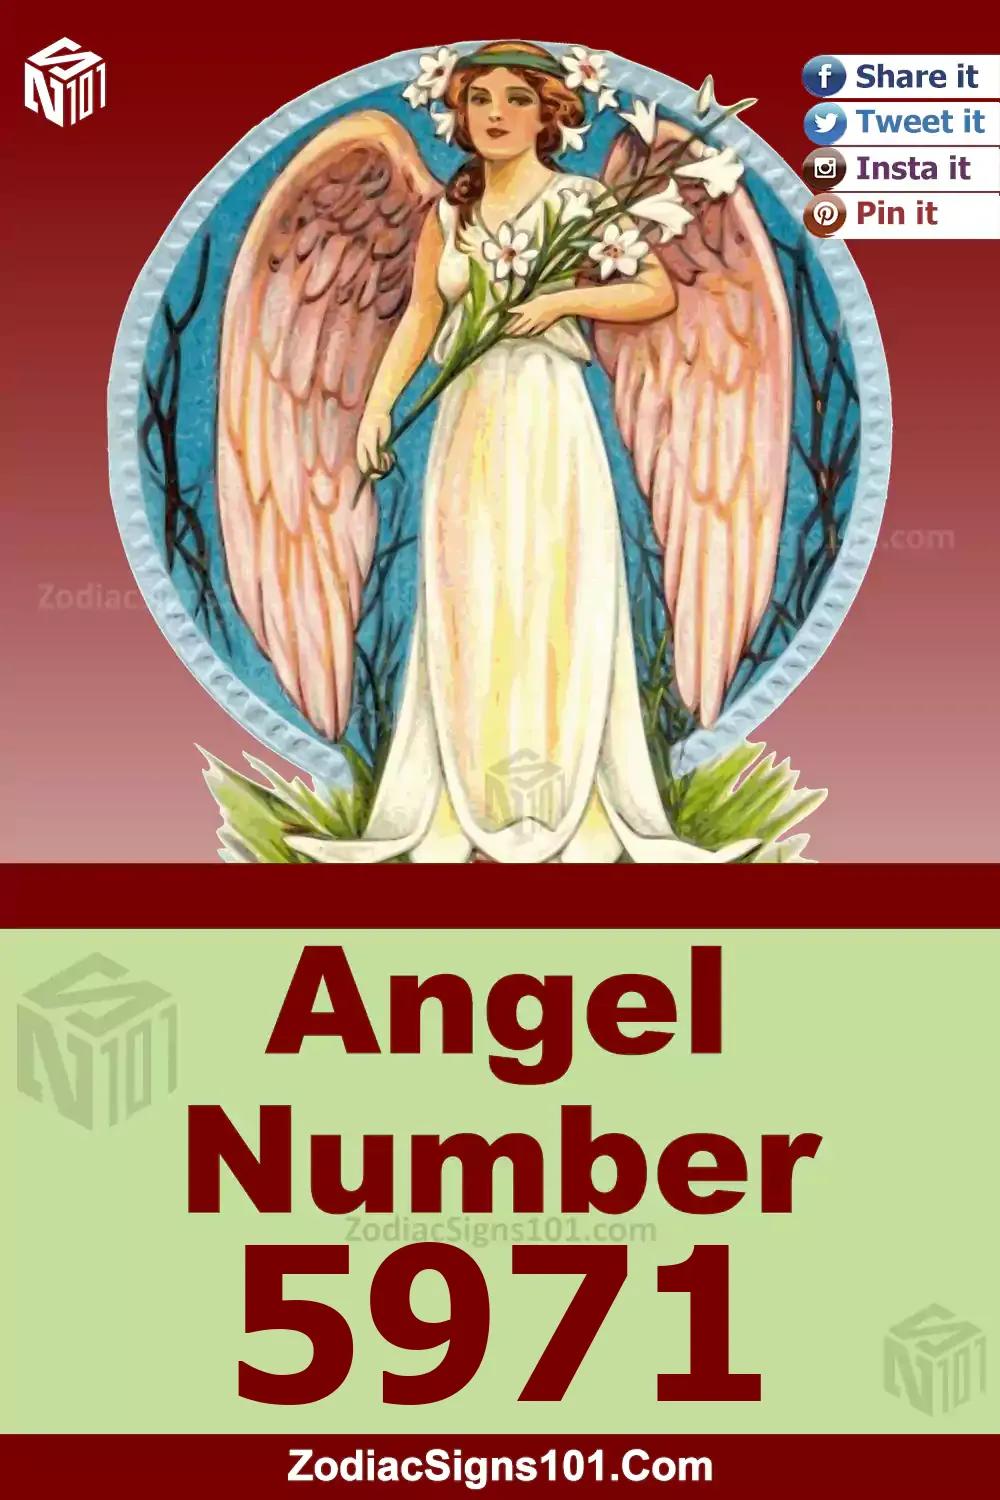 5971-Angel-Number-Meaning.jpg